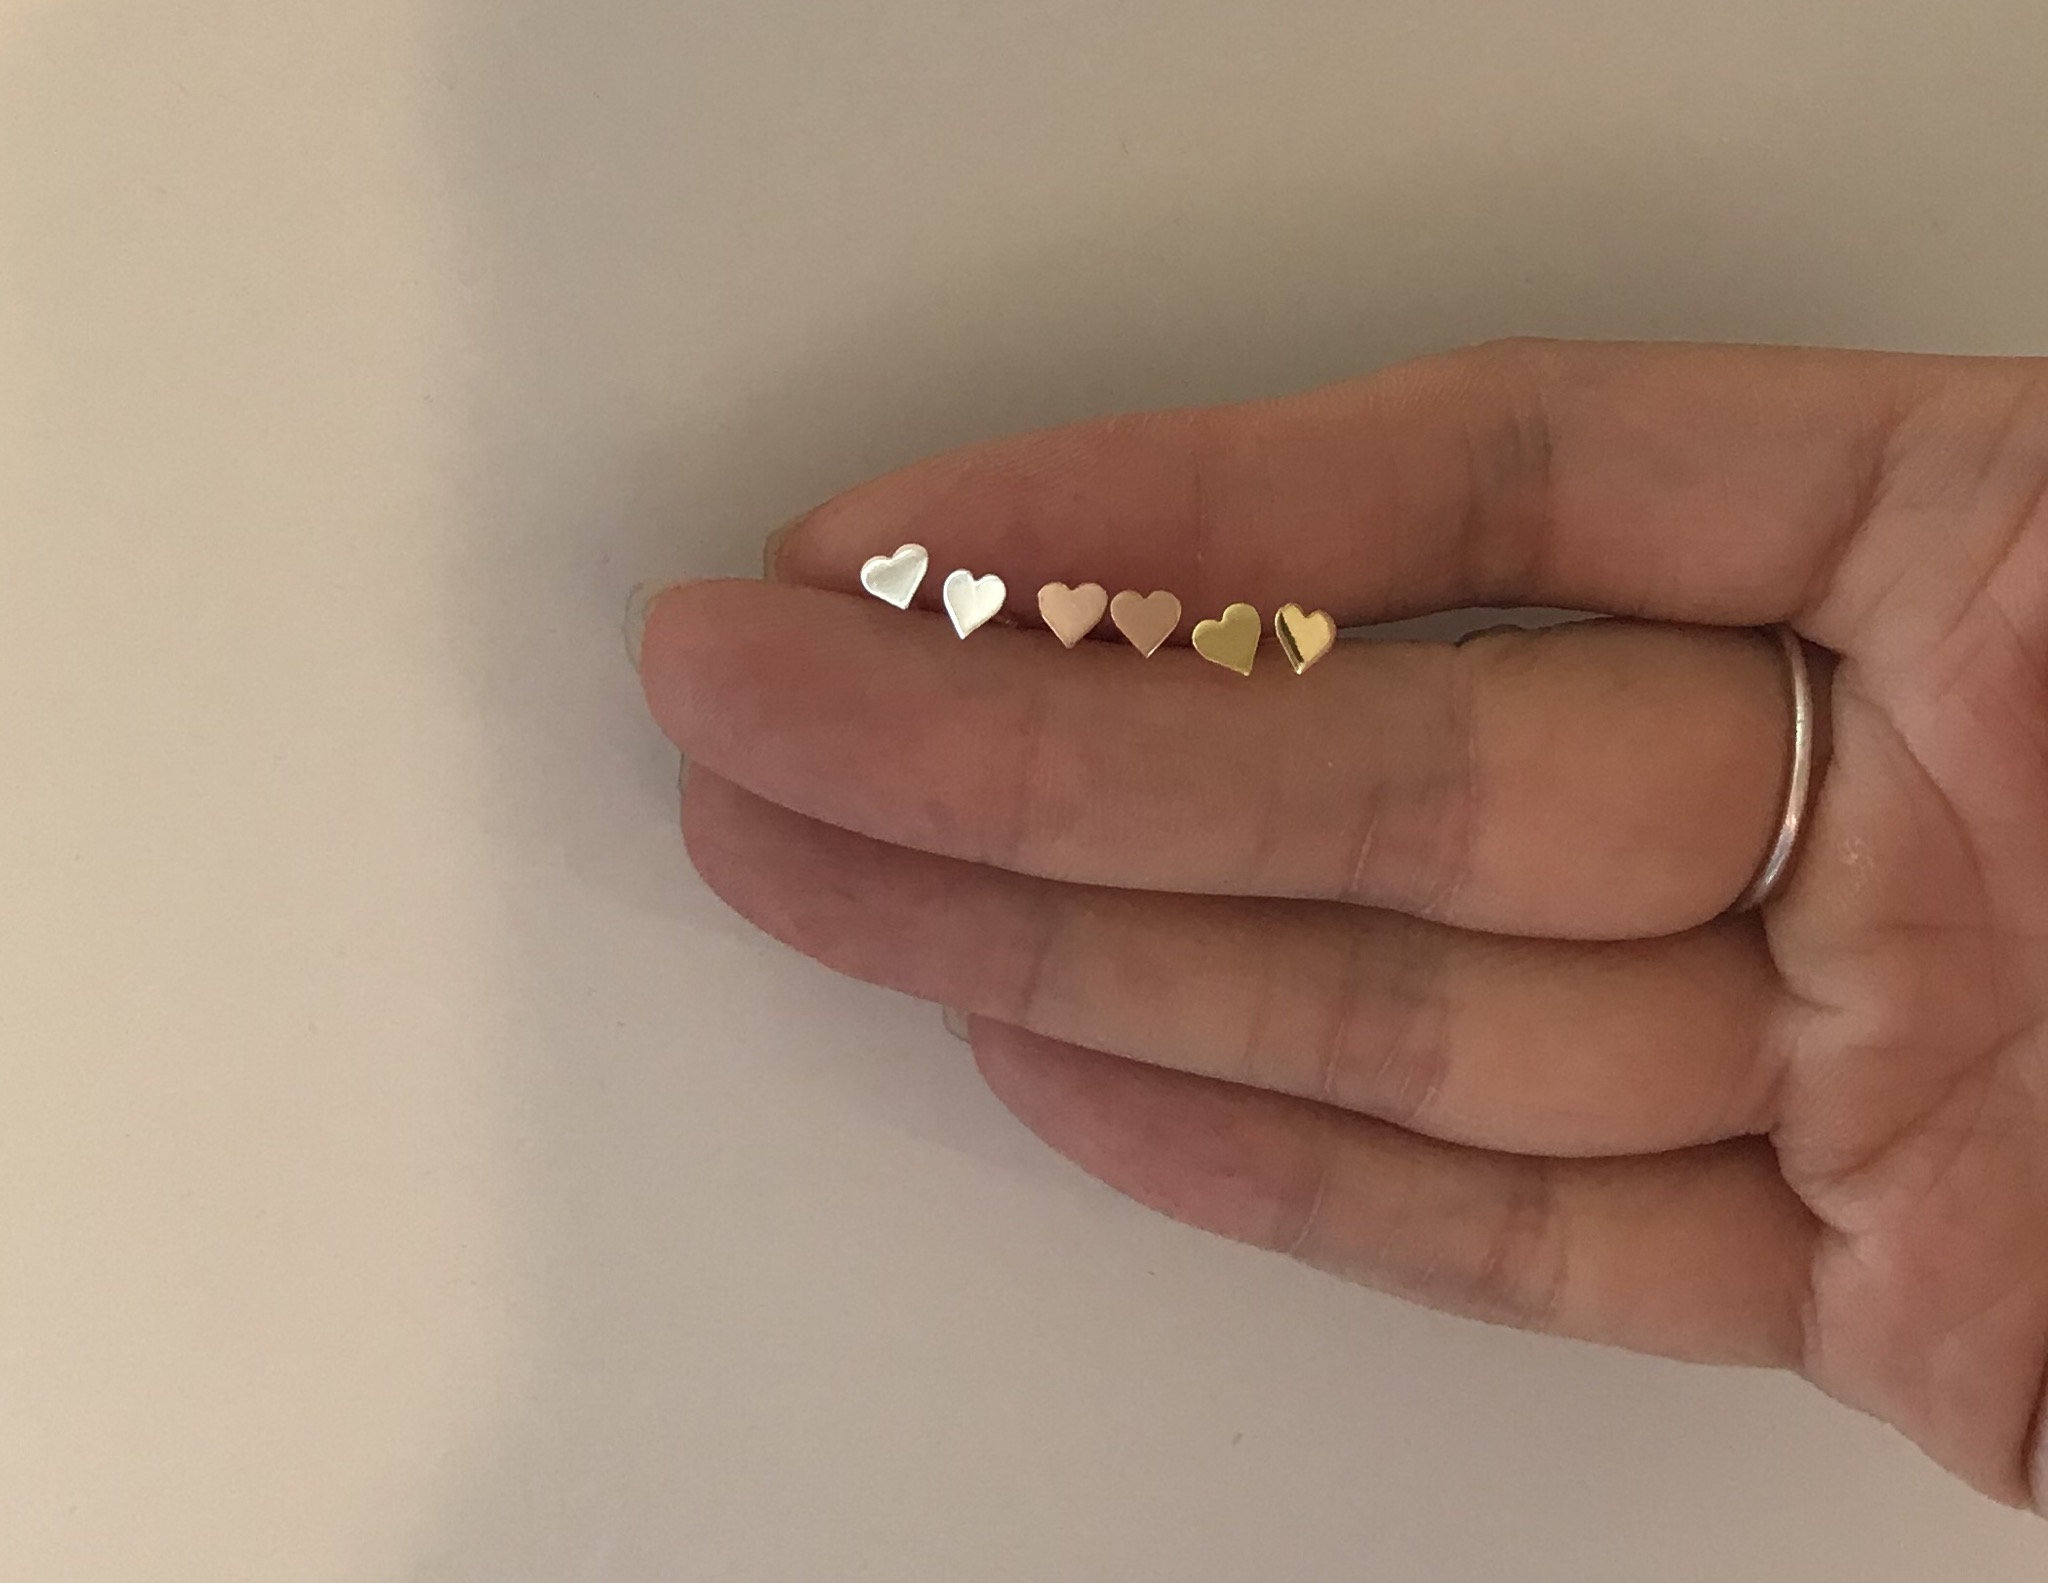 Tiny Heart Stud Tiny Heart Stud Earrings in Rose Gold Dainty Little Heart Stud